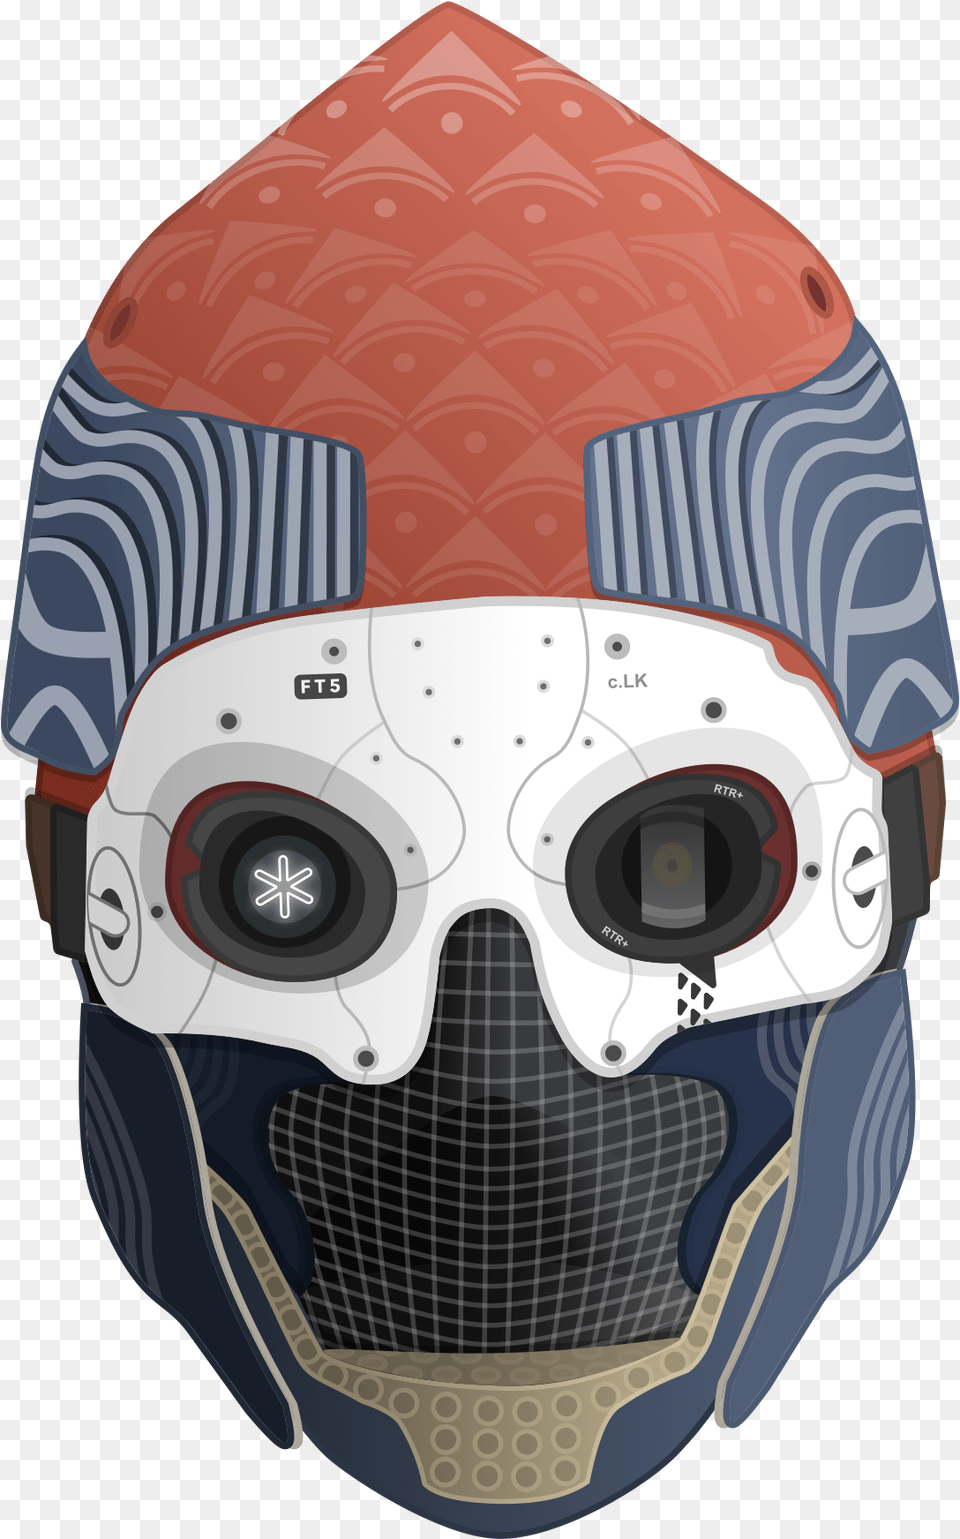 Destiny 2 One Eye Mask, Crash Helmet, Helmet, Accessories, Goggles Png